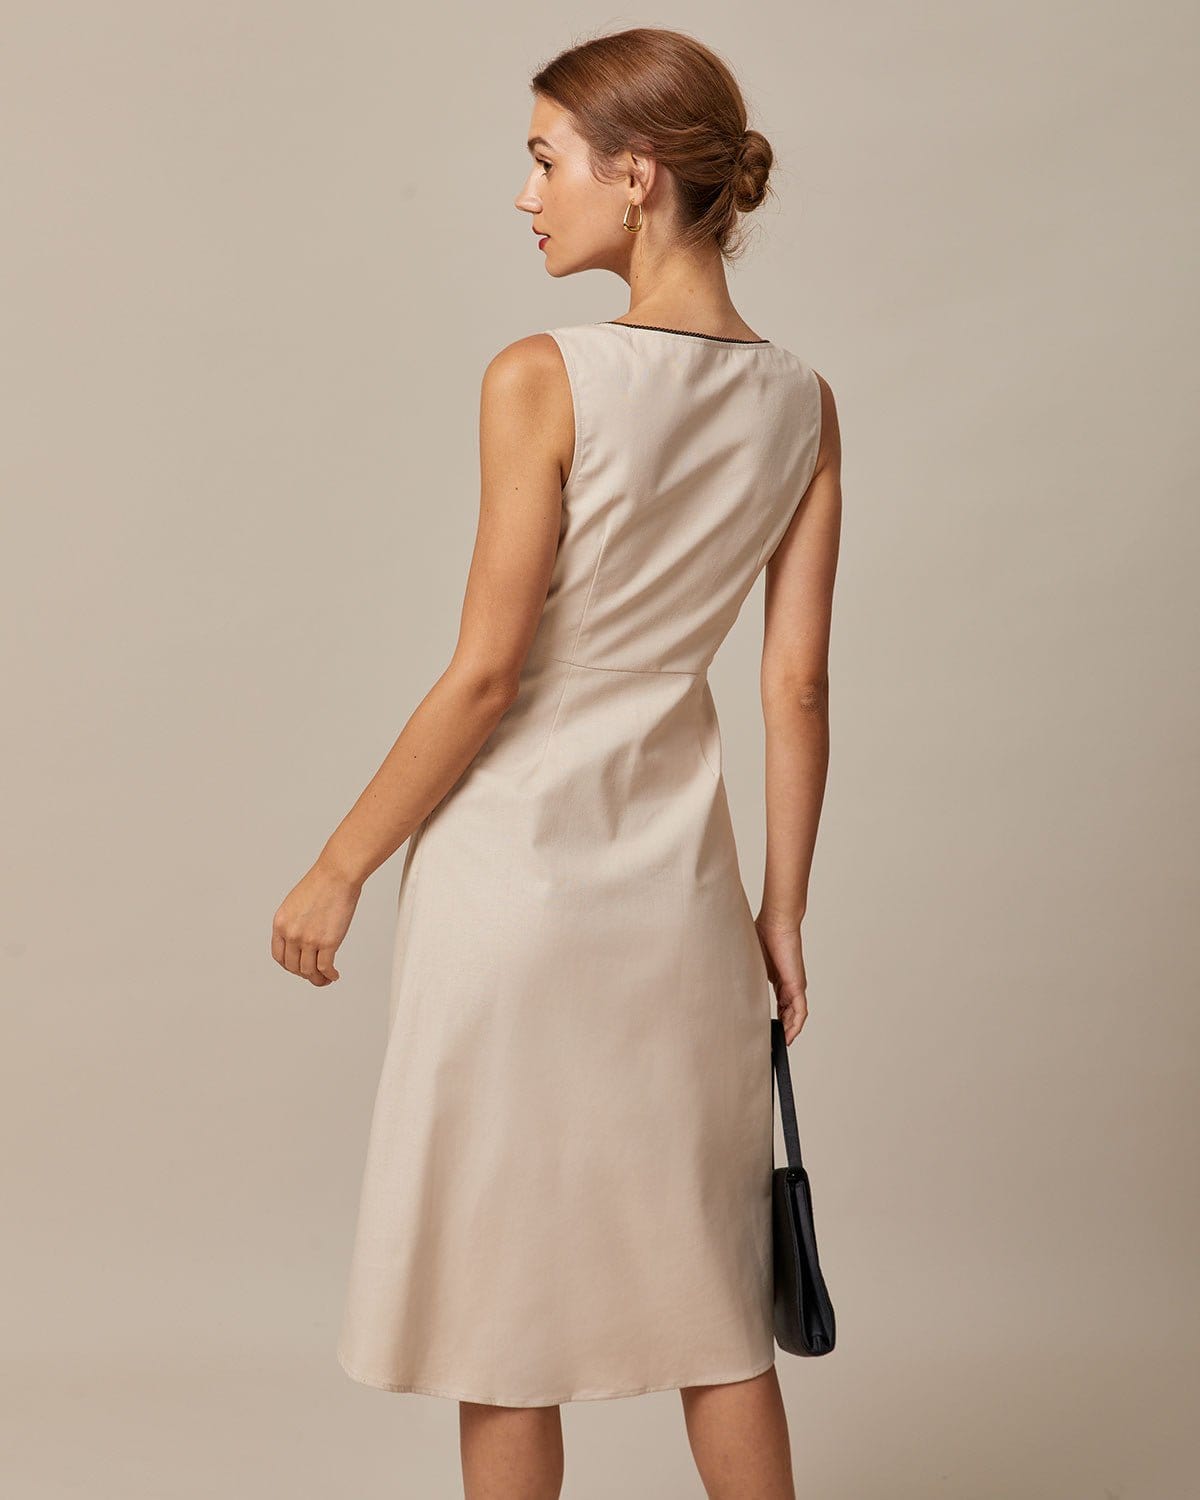 The Khaki Round Neck A-line Midi Dress Dresses - RIHOAS